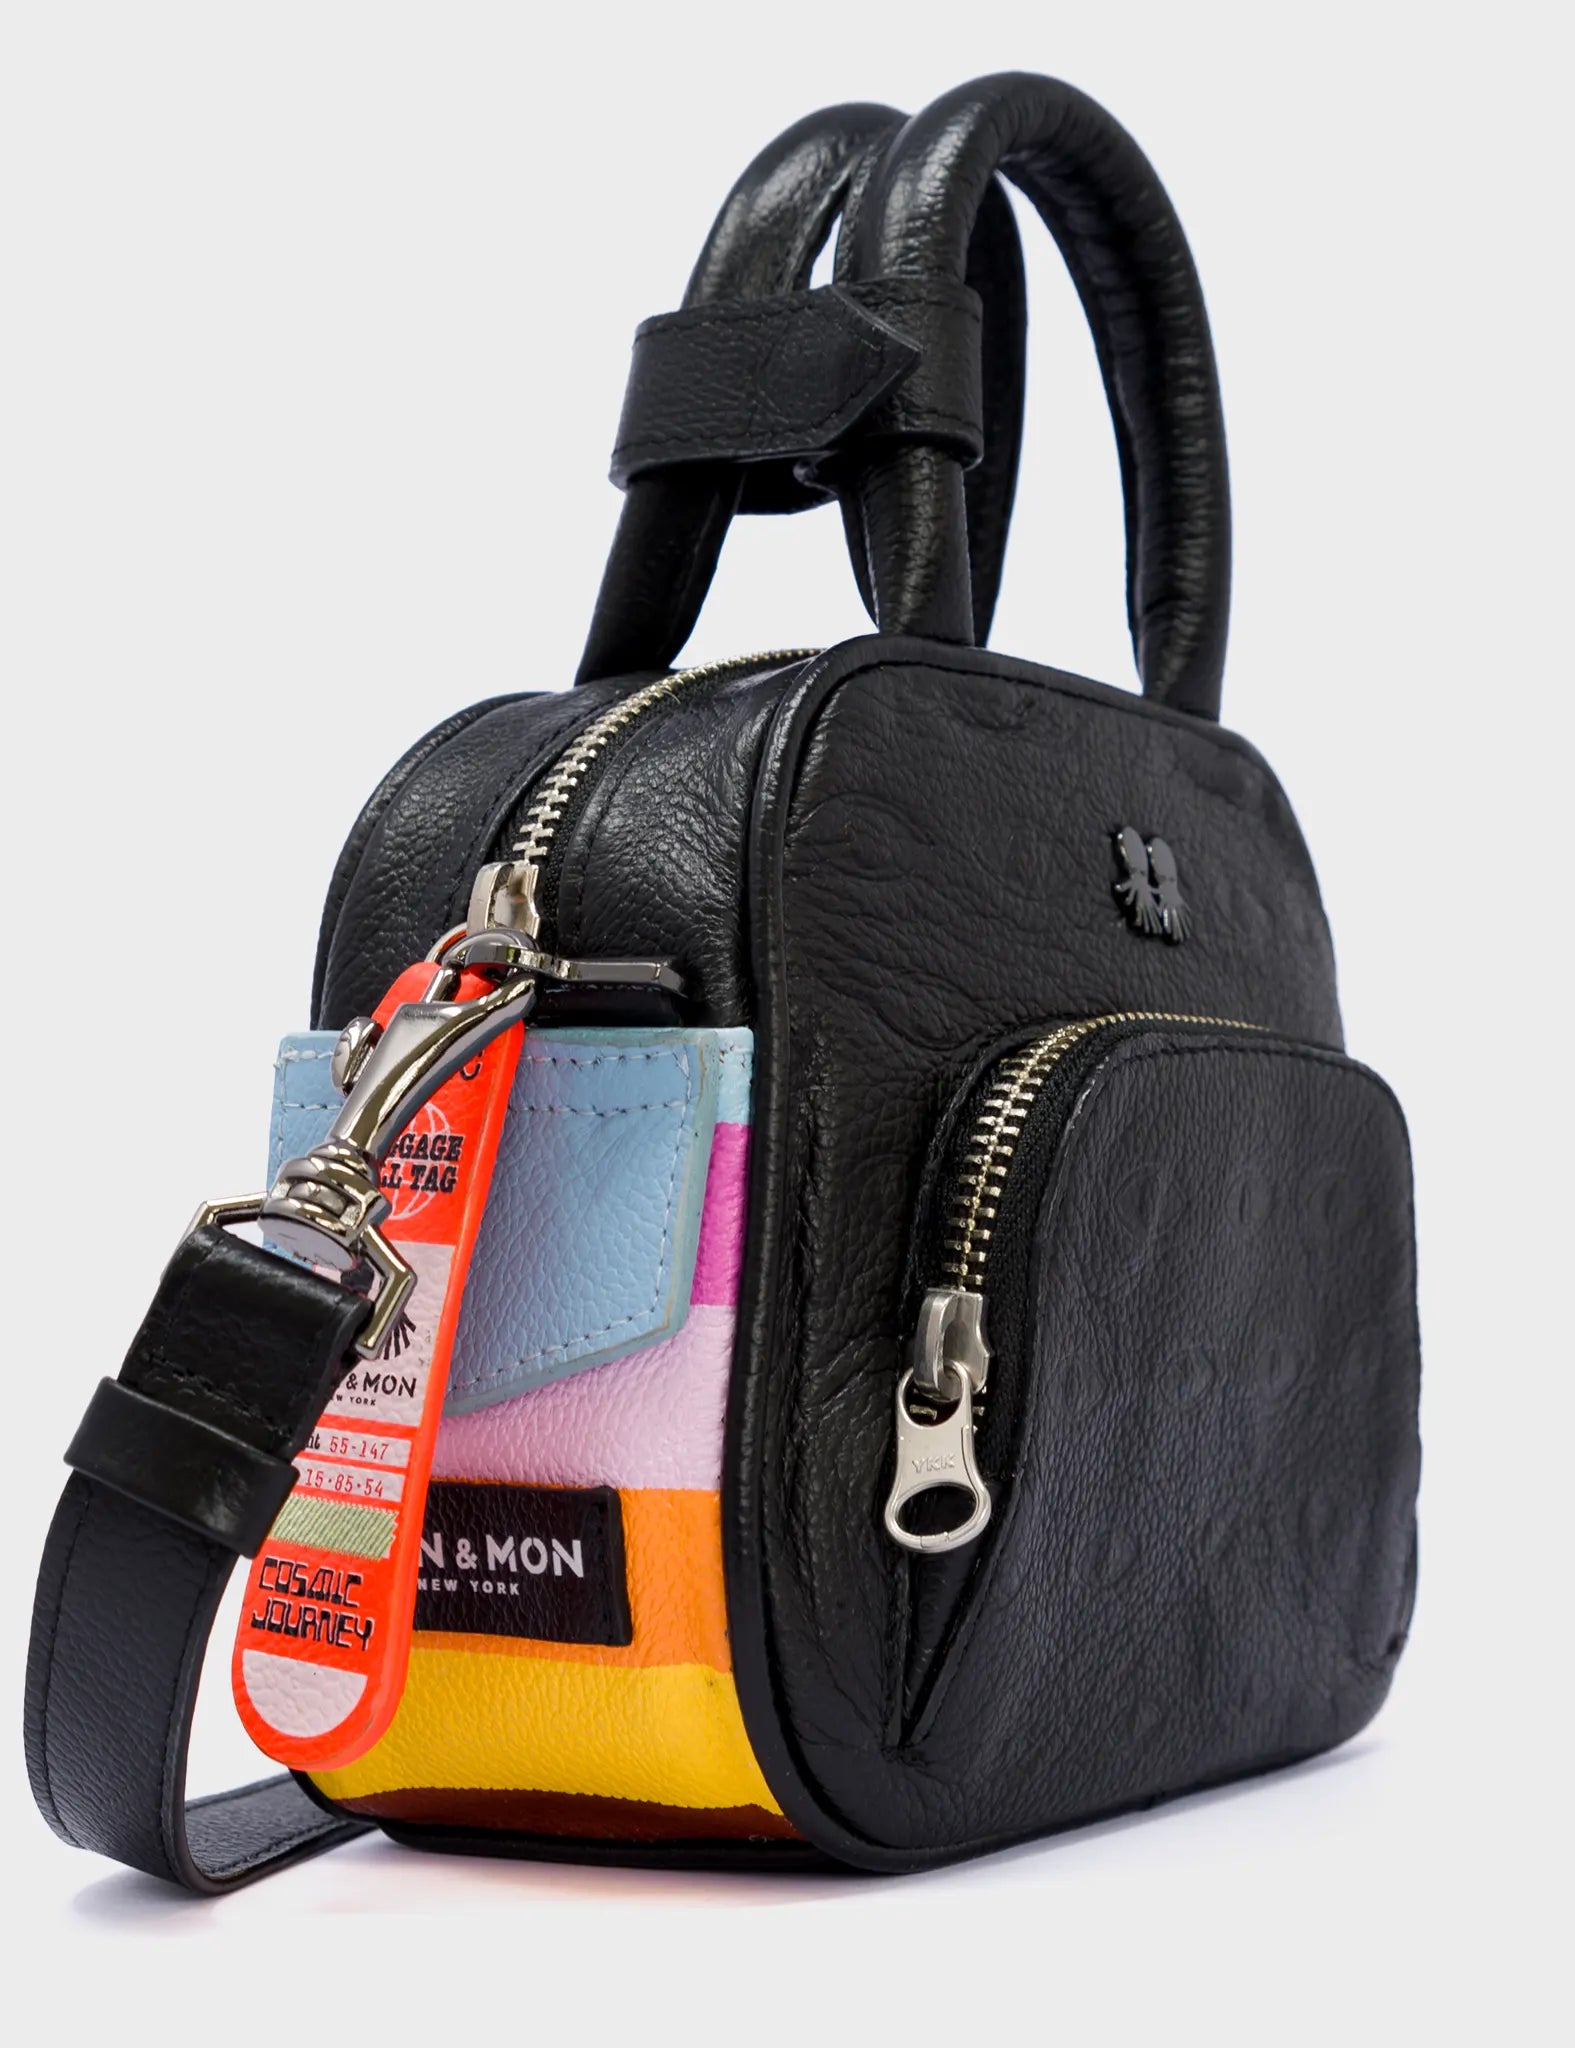 Daniela Moda Vera Pelle Small Italian Leather Purse In Tangerine Orange |  Italian leather purse, Leather purses, Orange handbag